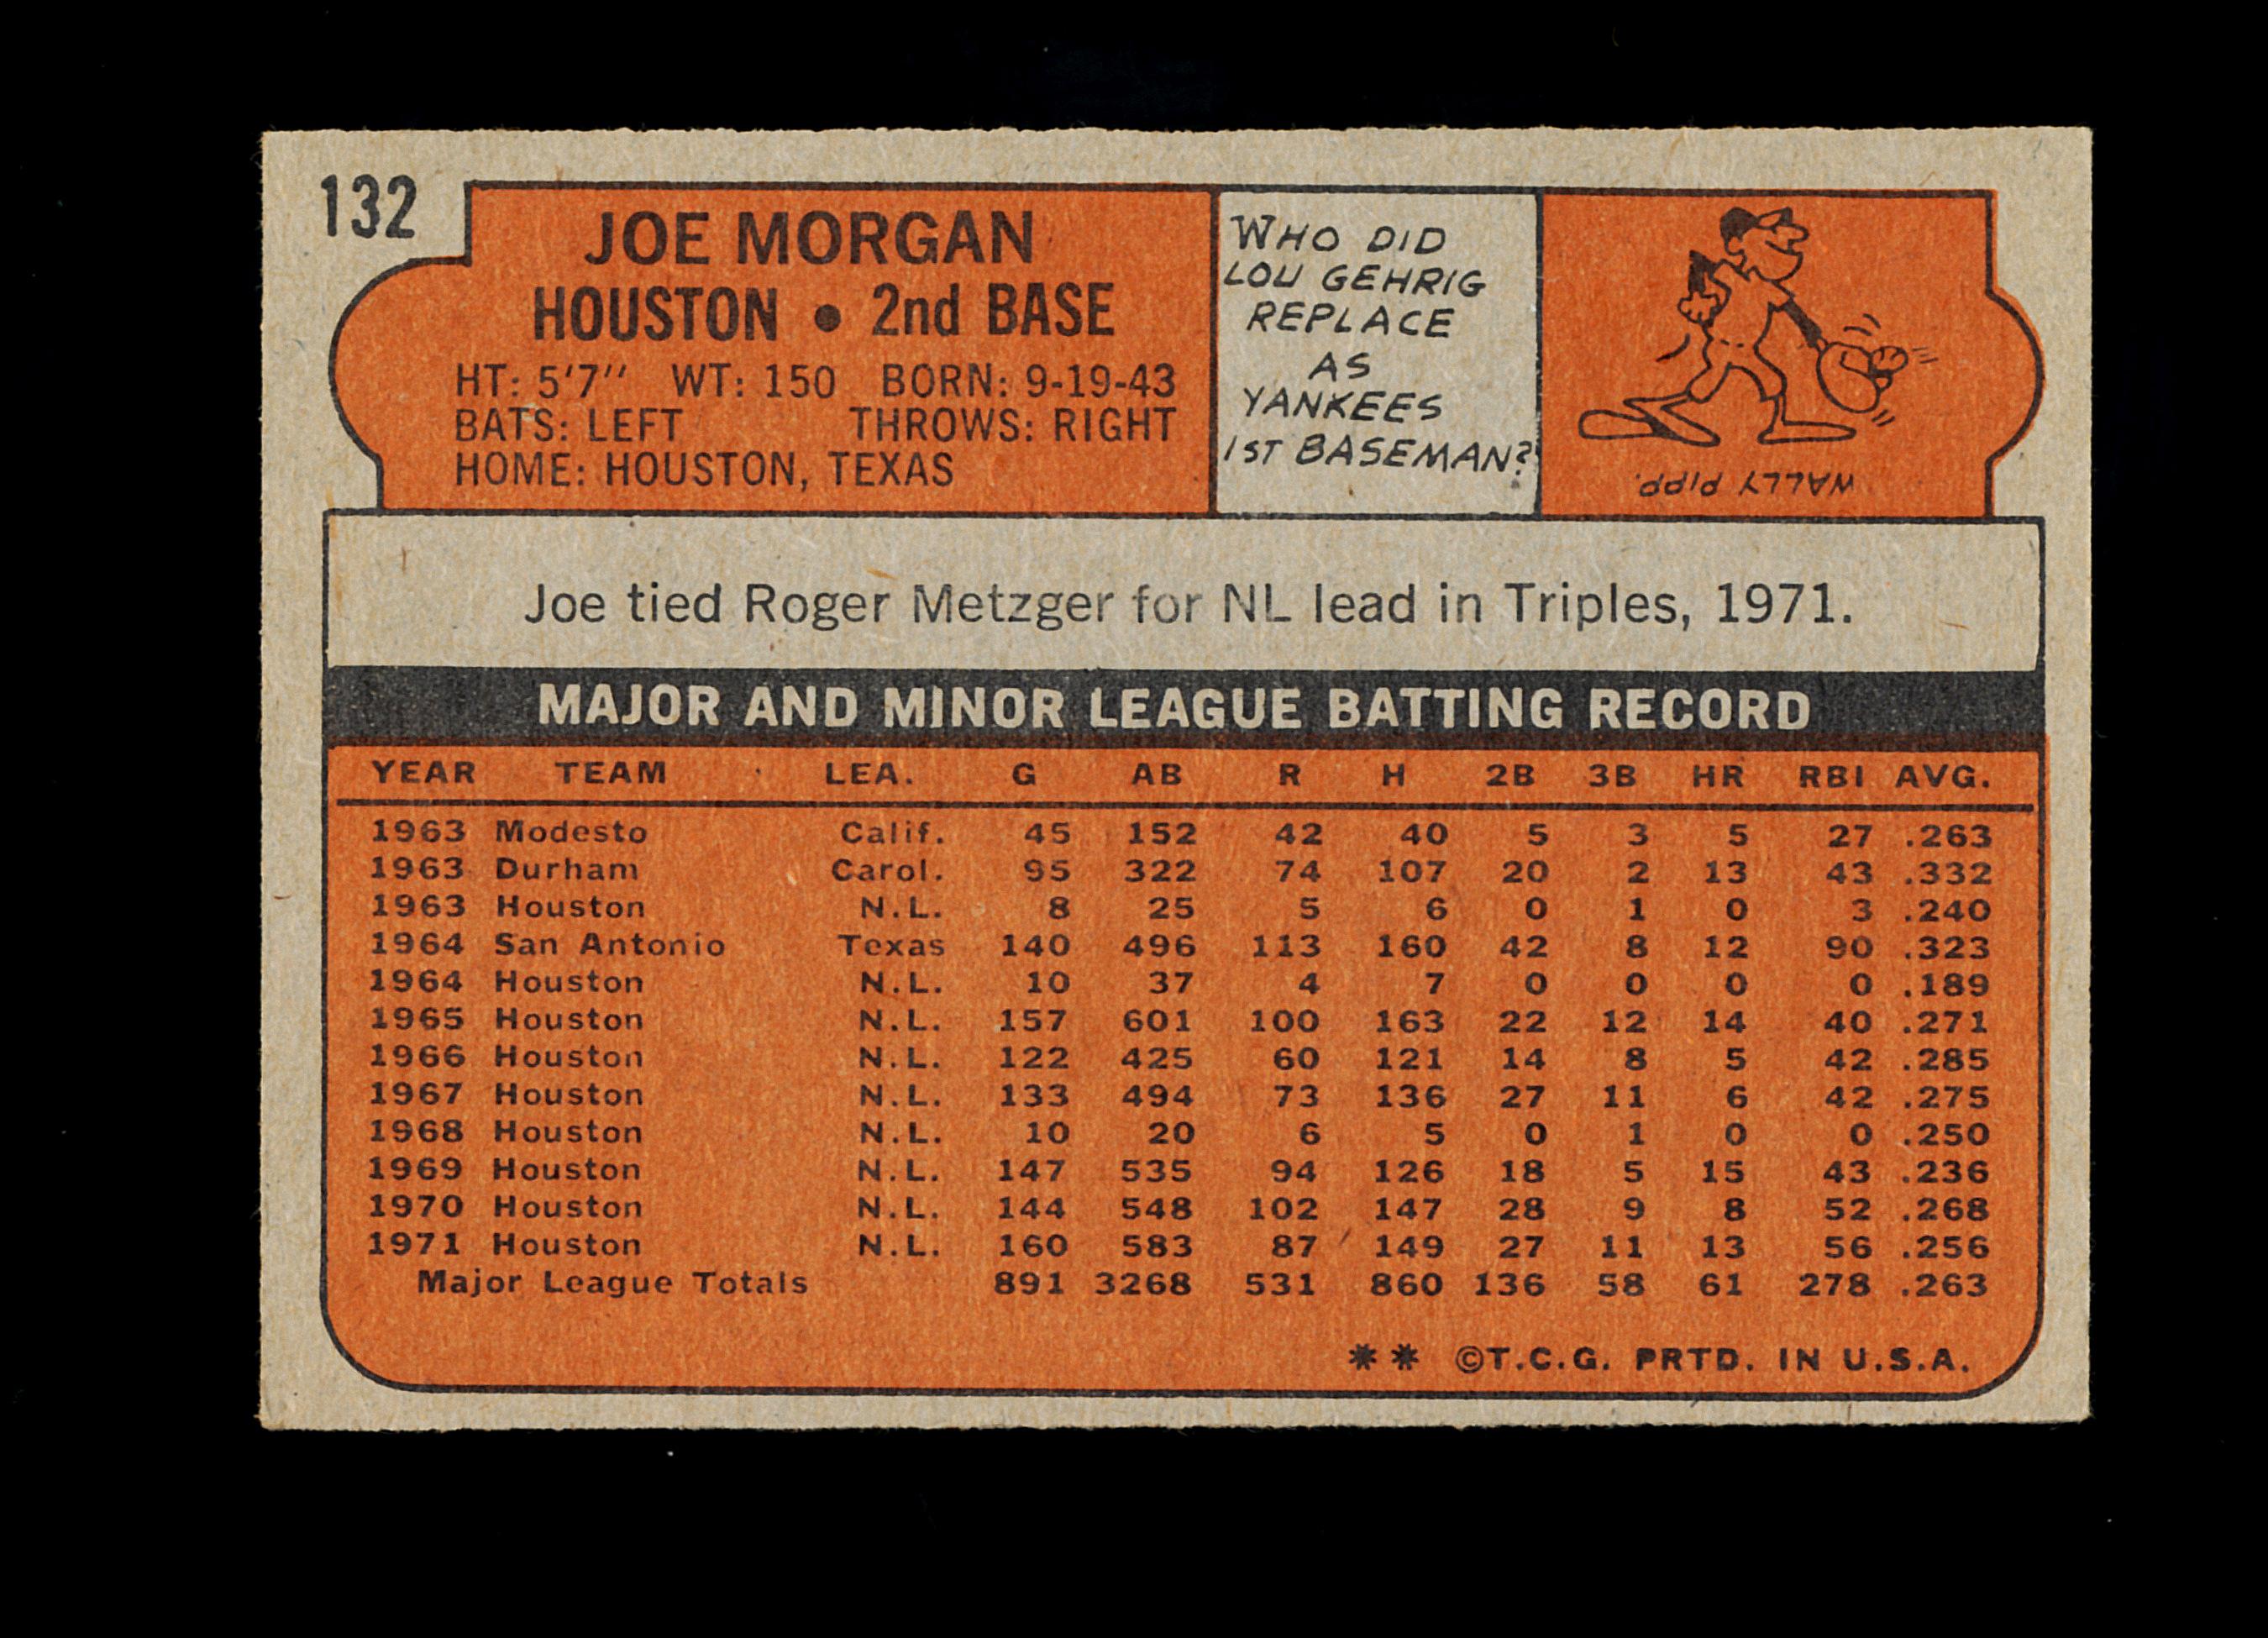 1972 Topps Baseball Card #132 Hall of Famer Joe Morgan Houston Astros